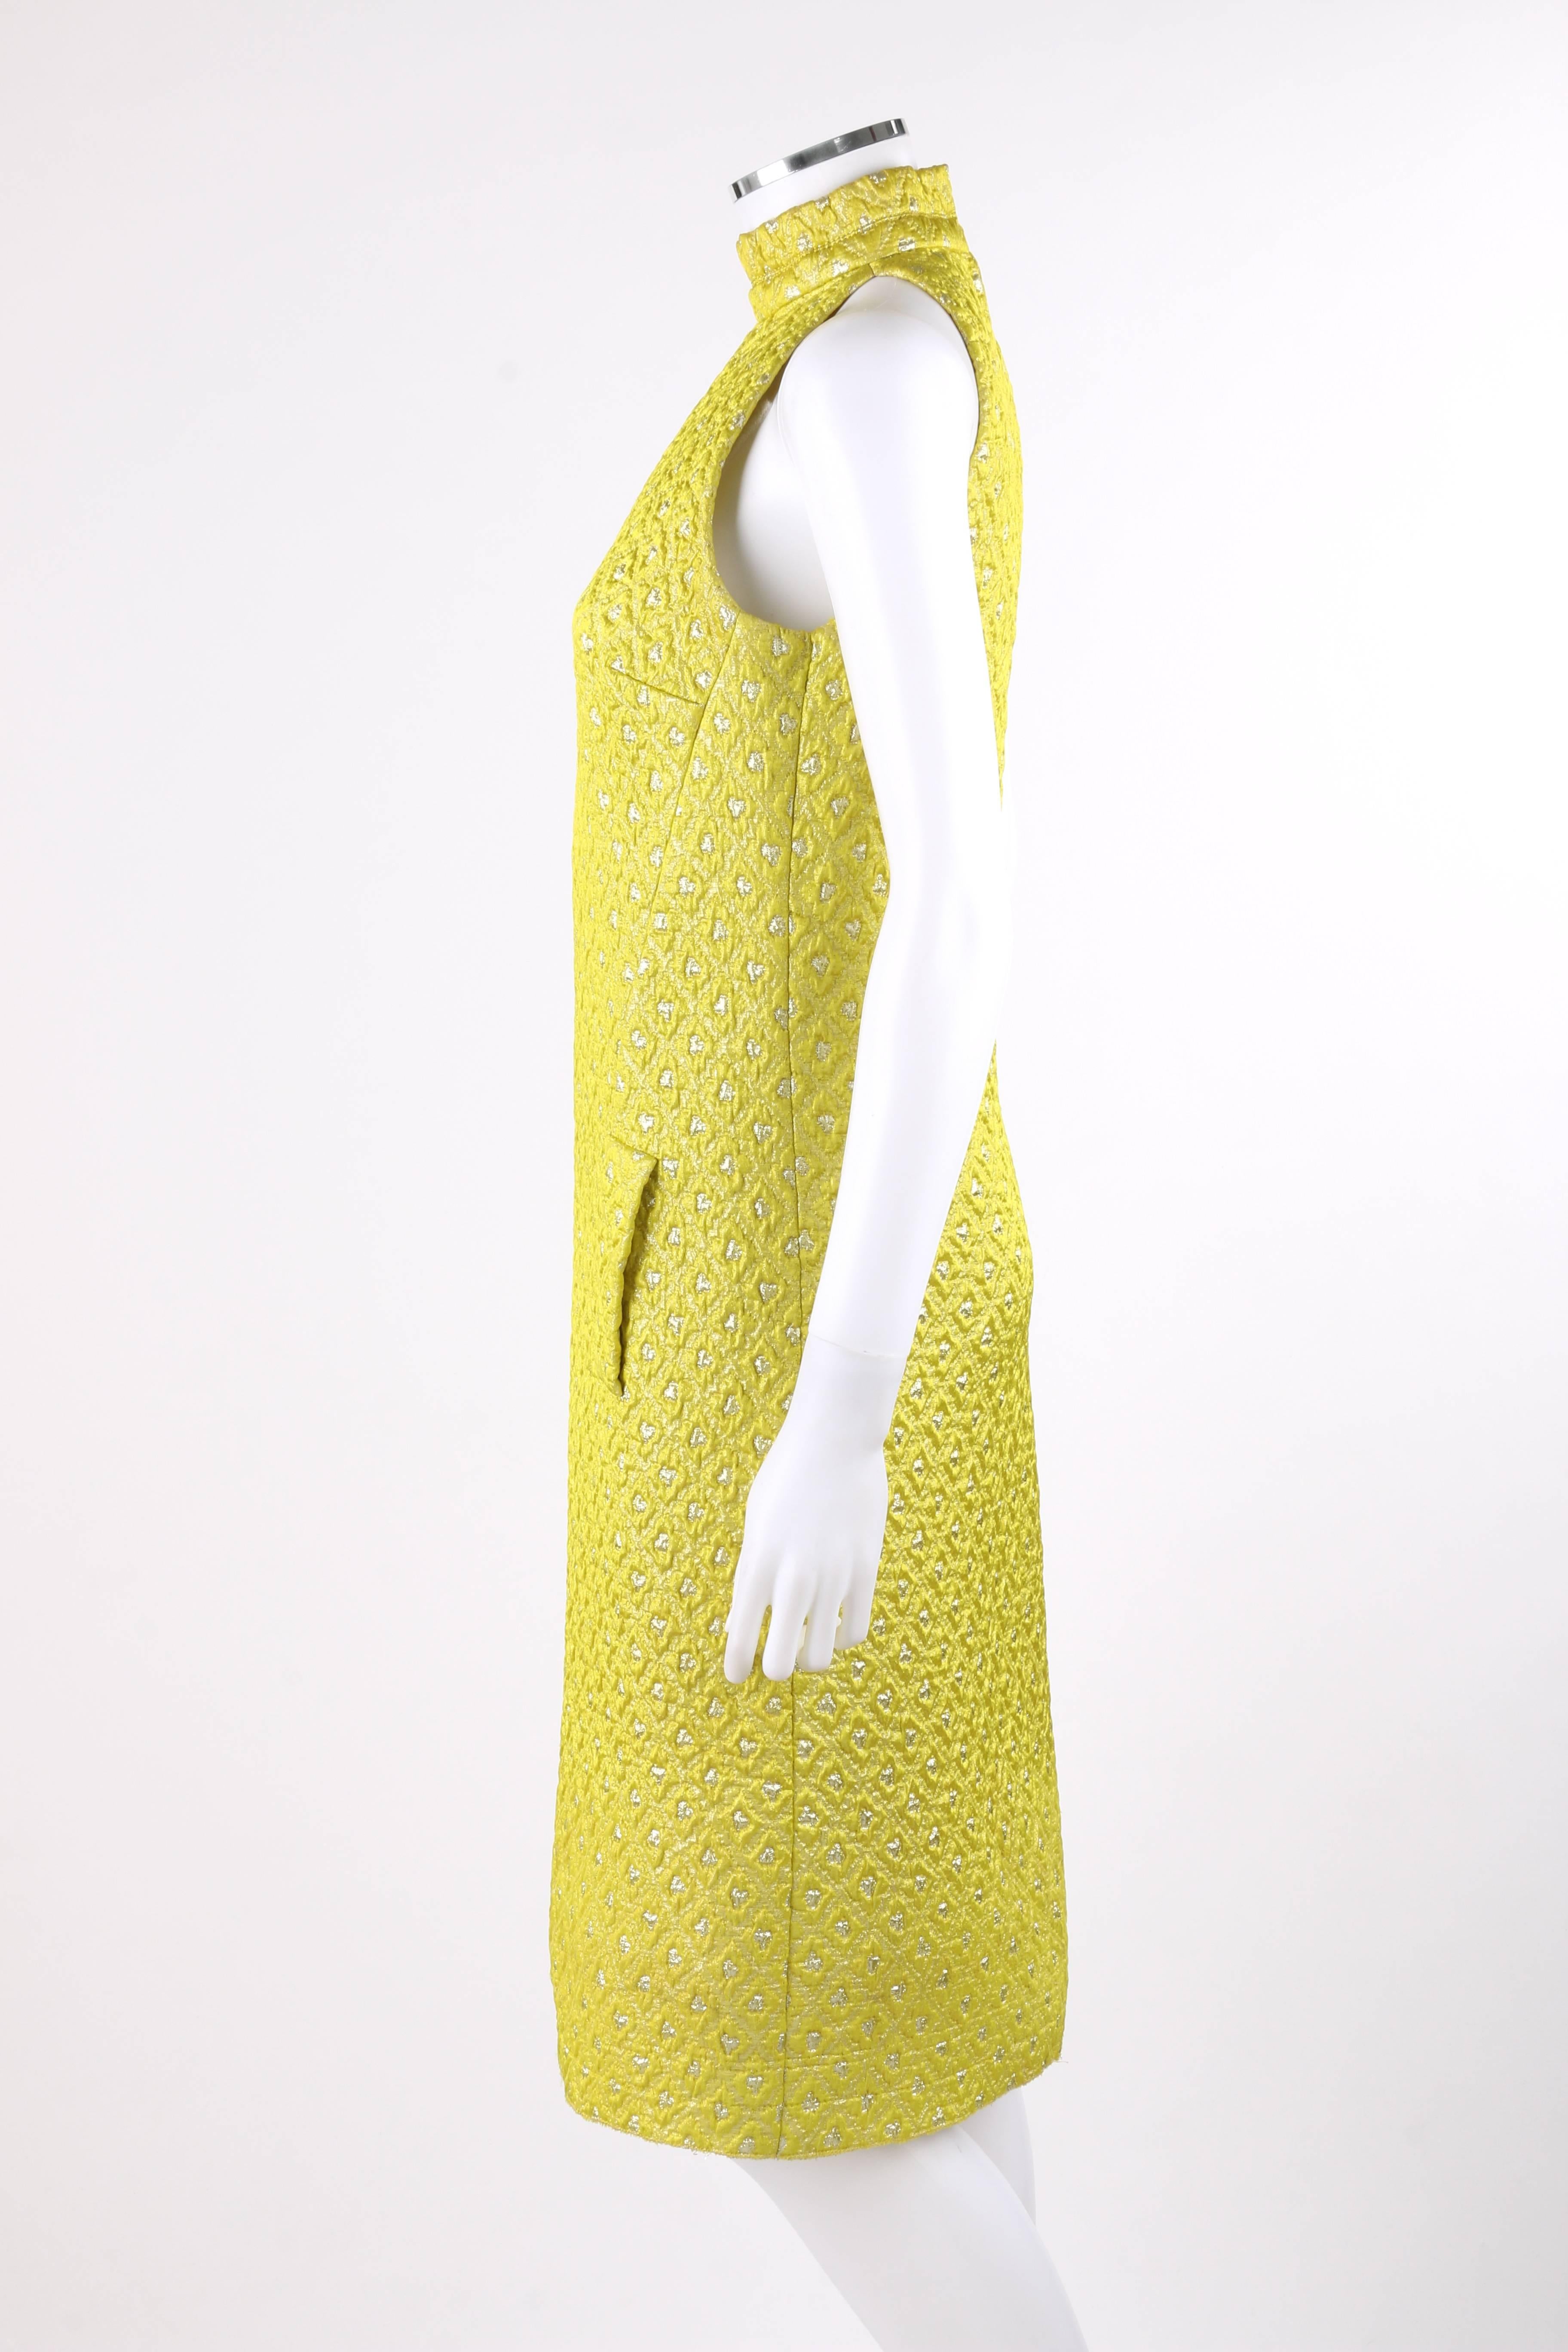 JEAN PATOU c.1960's Yellow Diamond Brocade Halter Shift Cocktail Dress For Sale 1